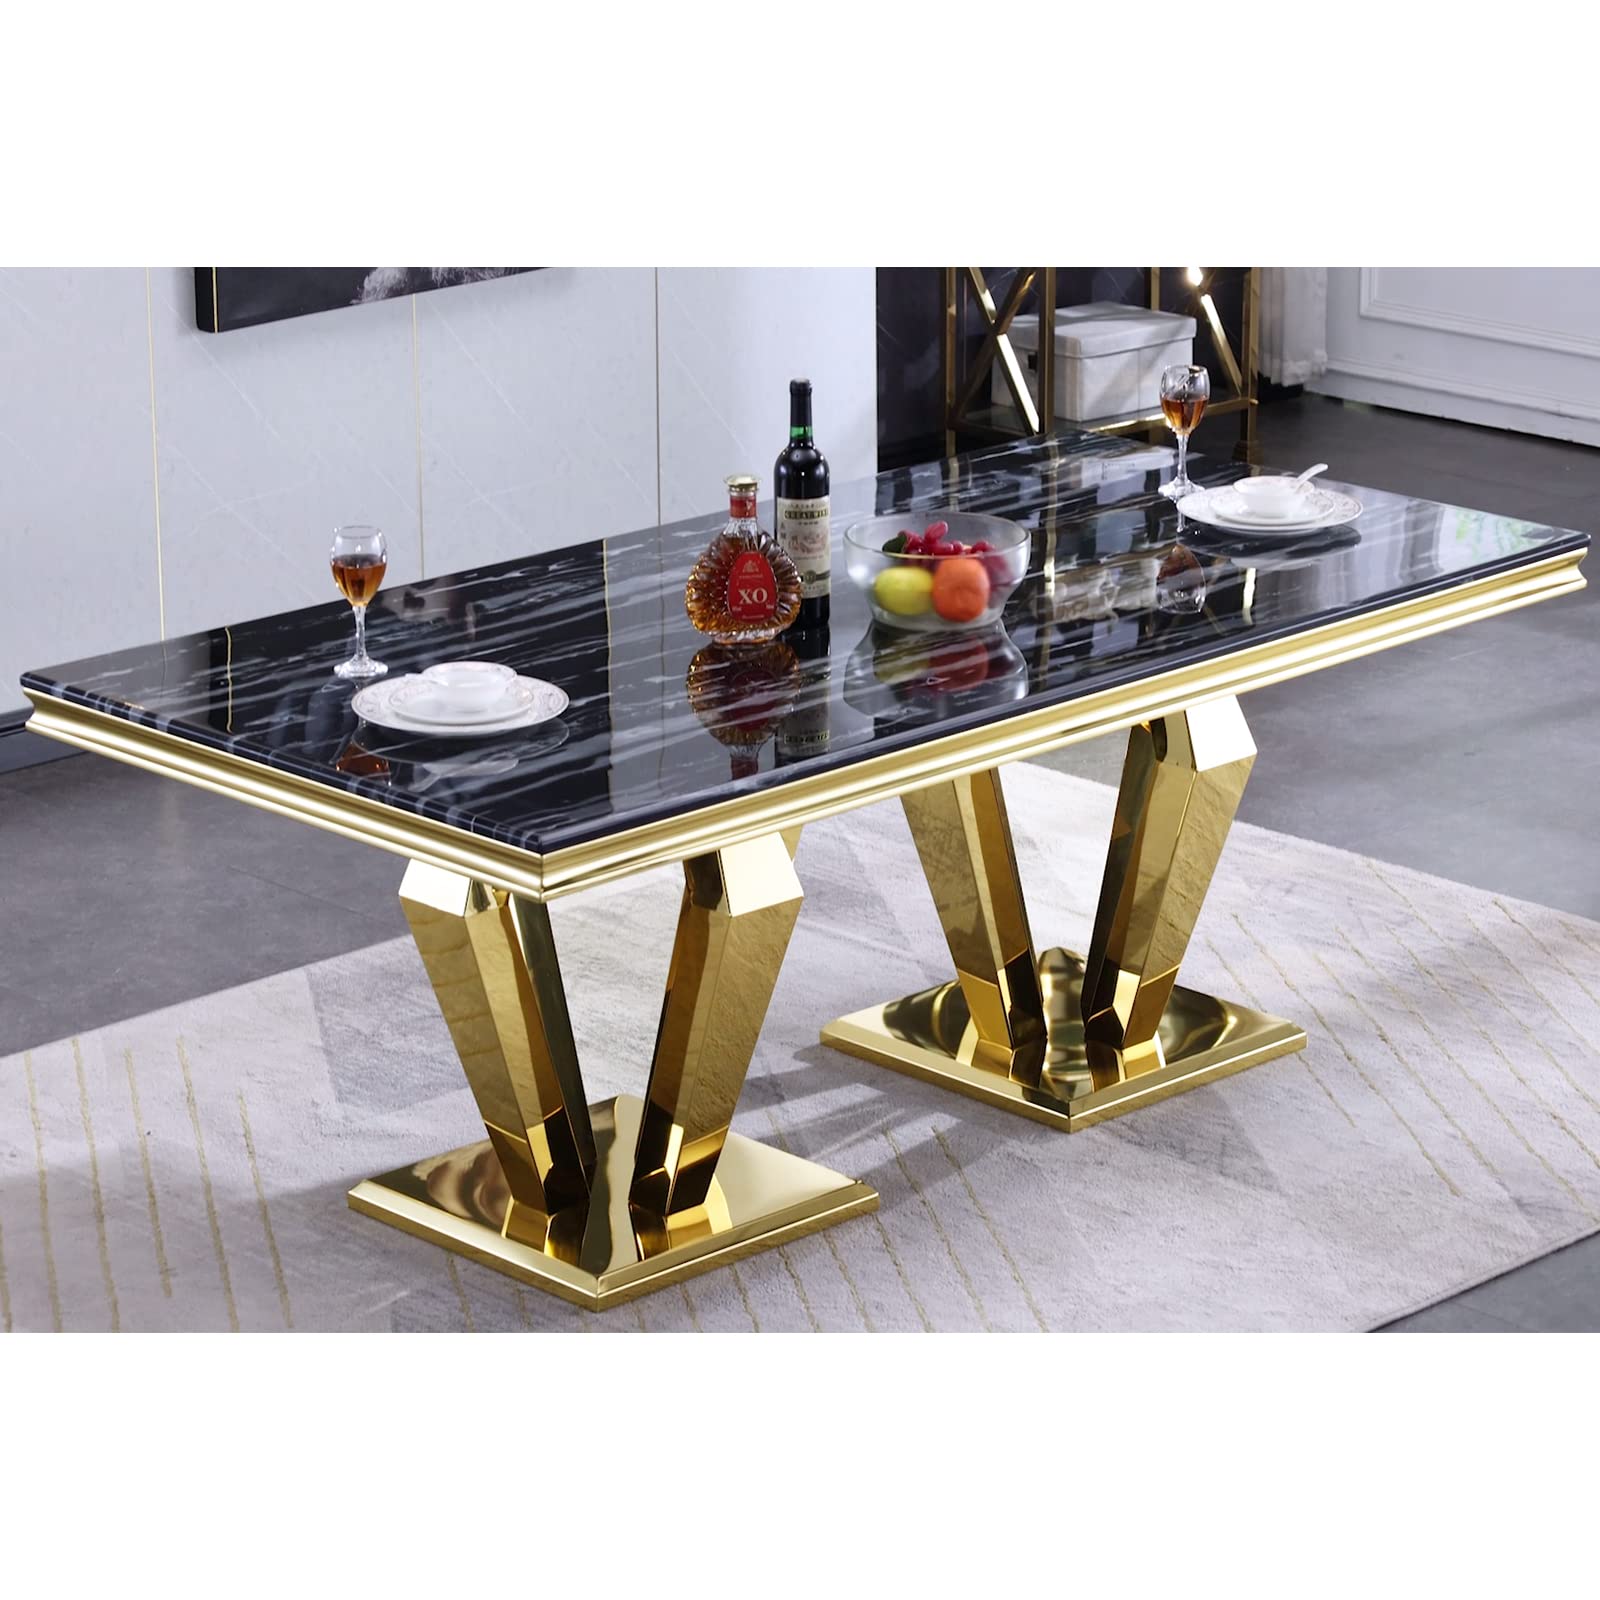 602-Set | AUZ Black and Gold Dining room Sets for 6